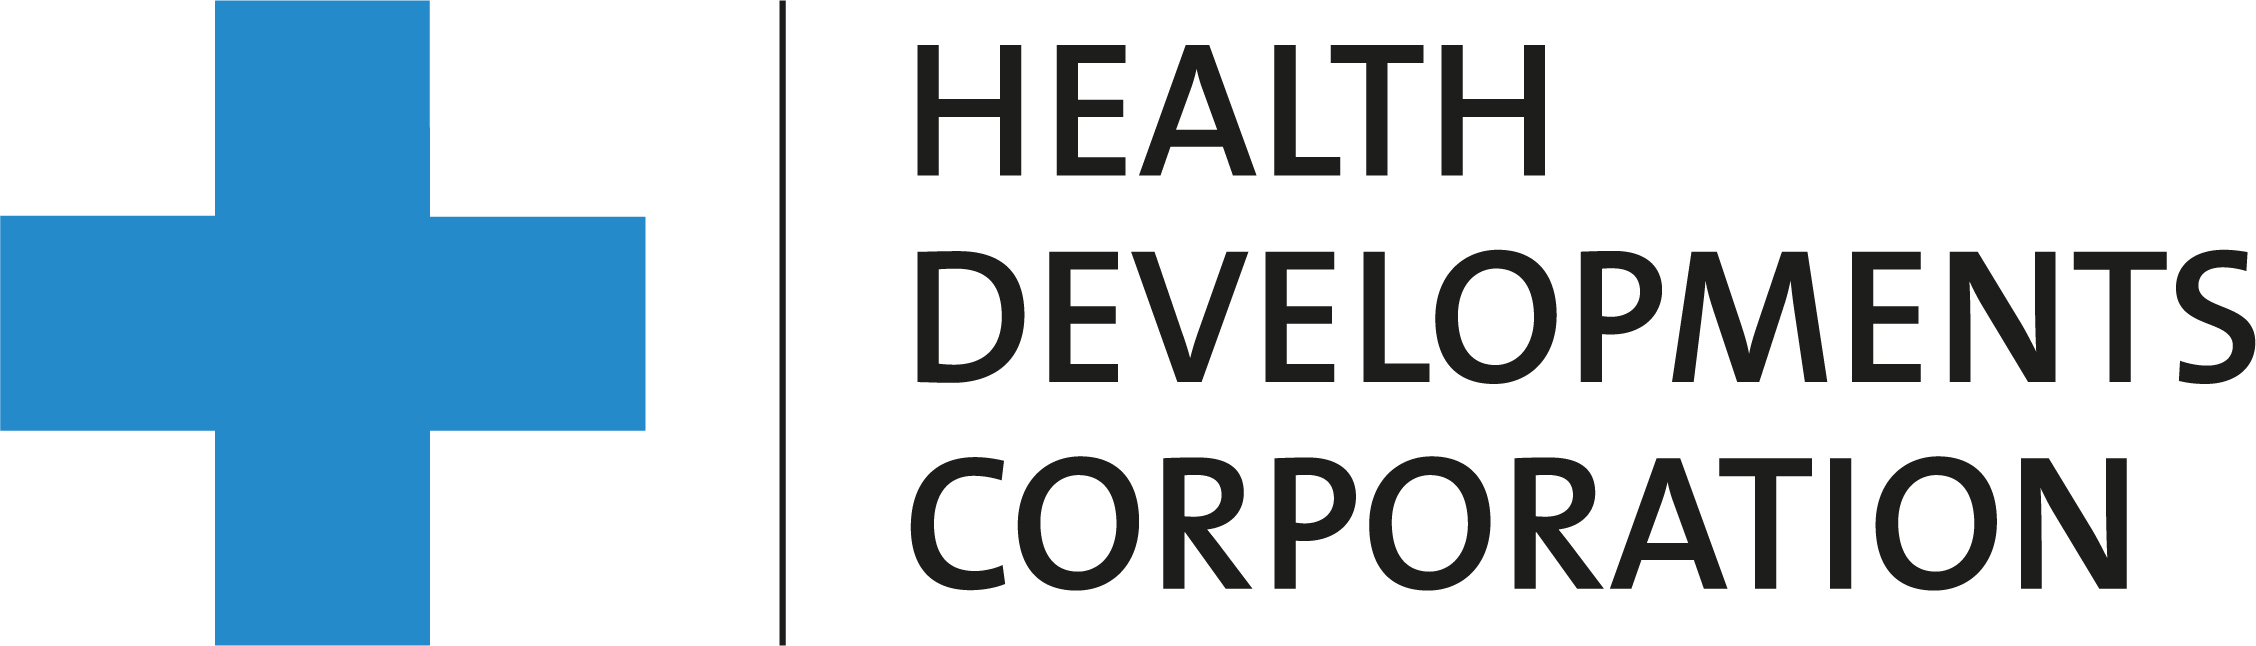 Health Developments Corporation